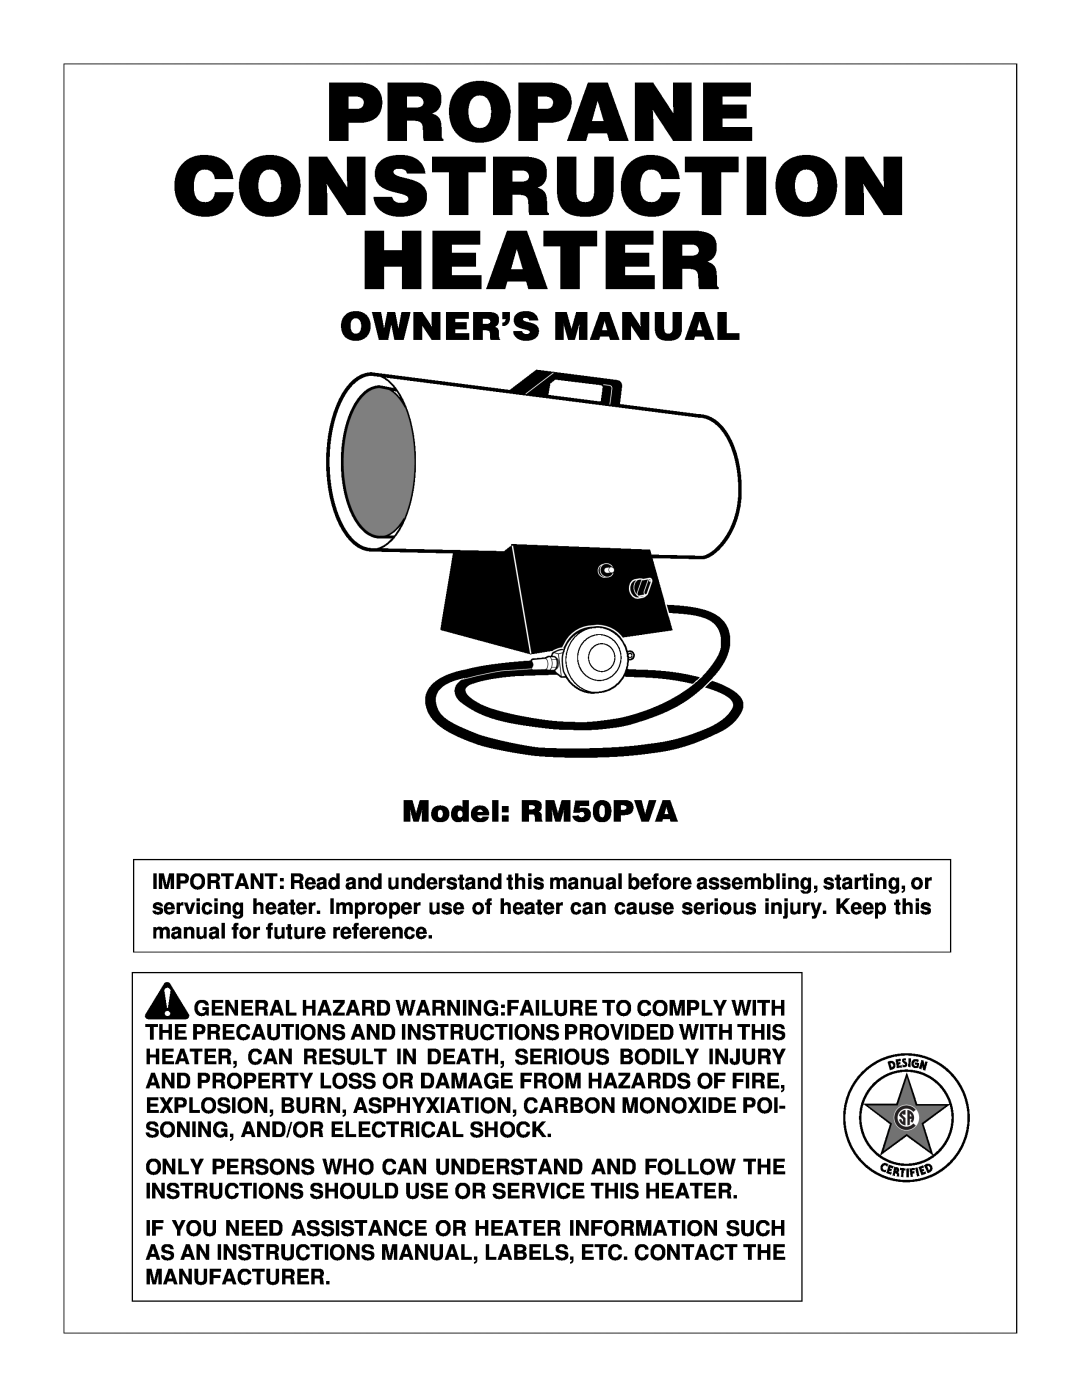 Desa owner manual Propane Construction Heater, Model RM50PVA 